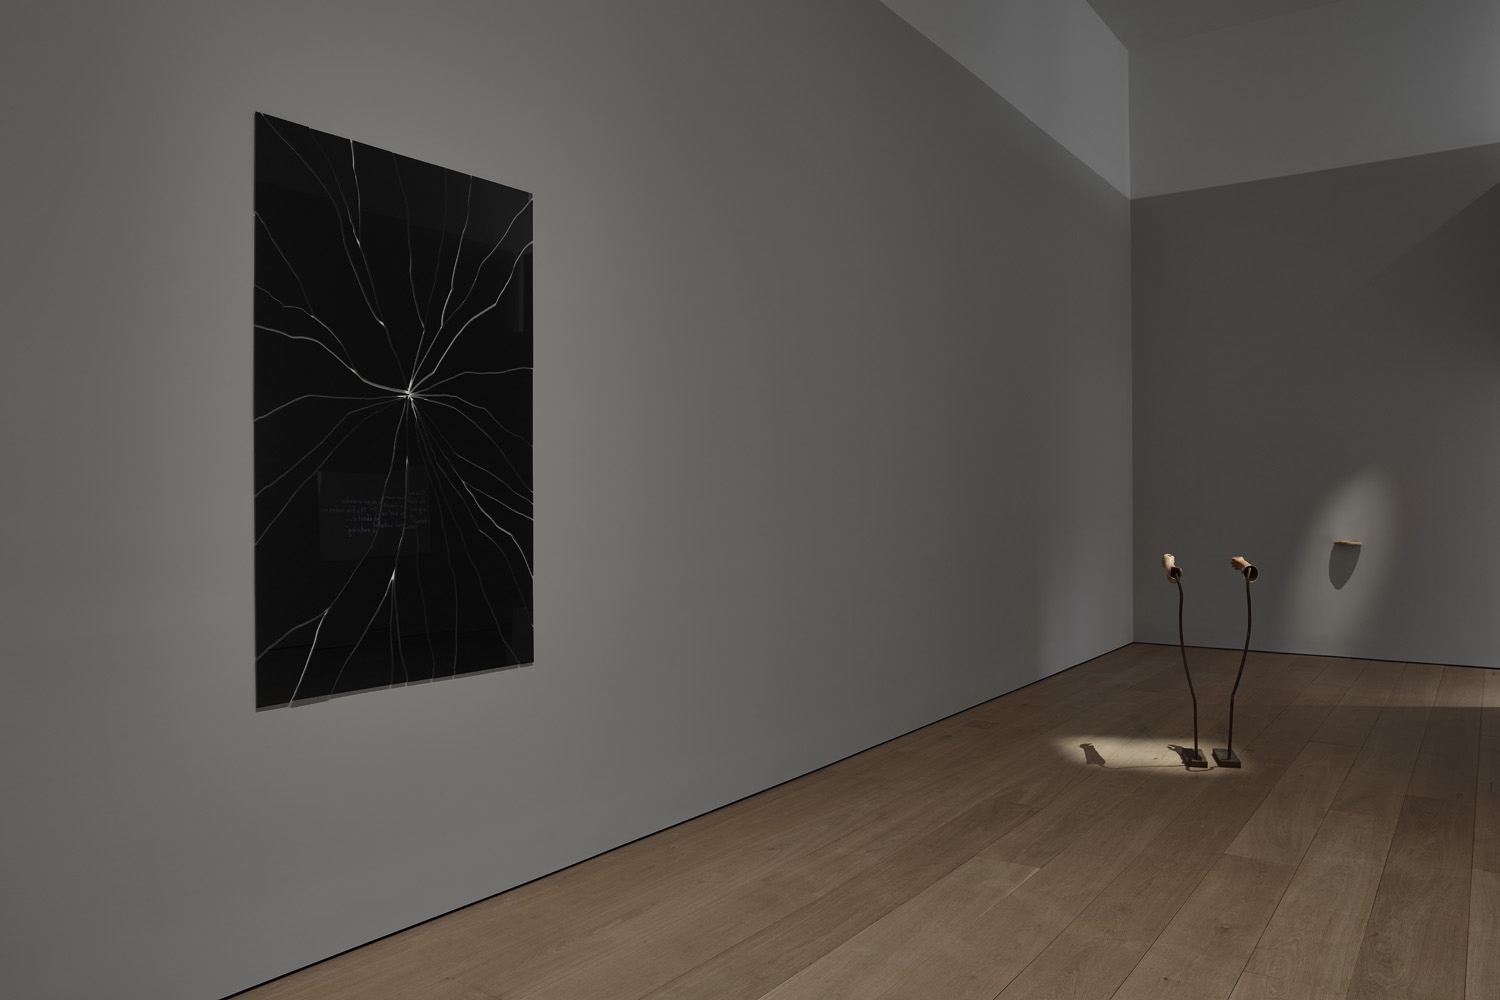 Kader Attia,&nbsp;Mirrors of Emotion, Installation view, Lehmann Maupin, New York